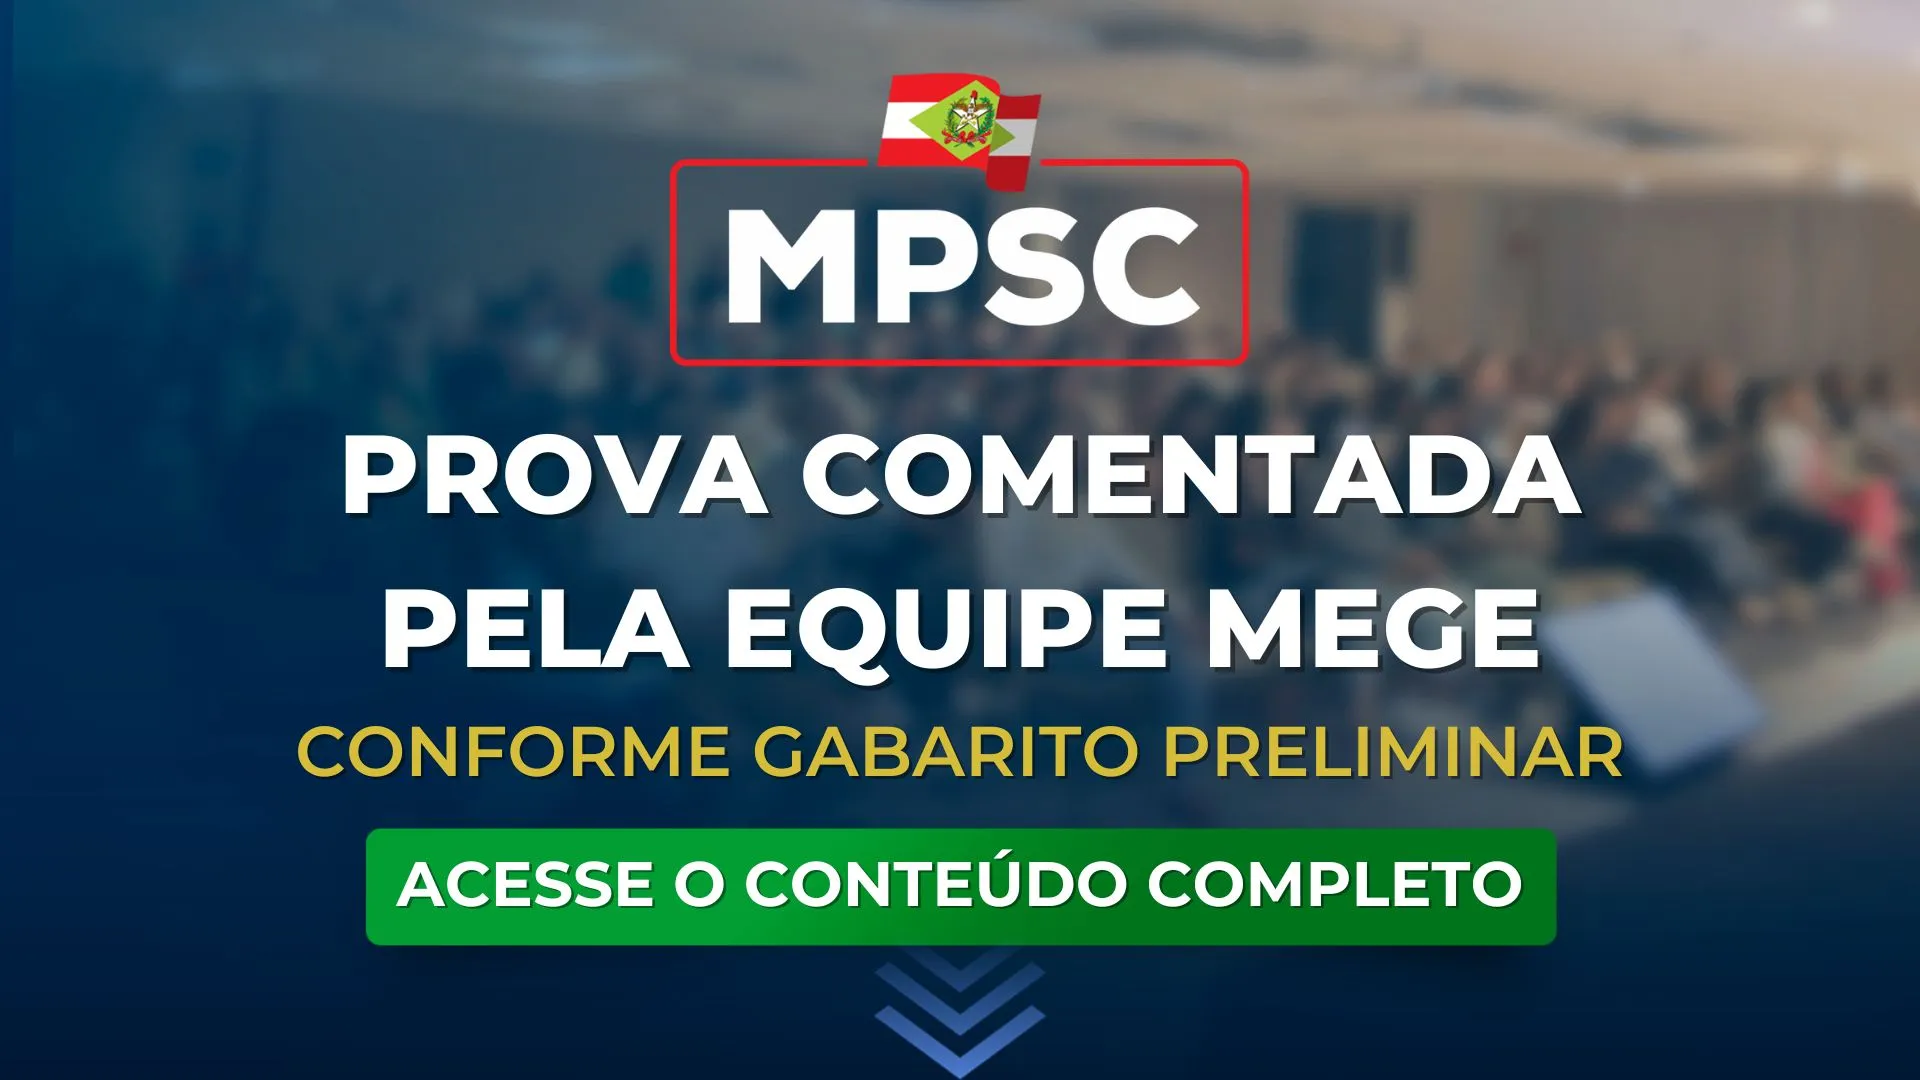 MPSC: PROVA COMENTADA pela Equipe Mege. Conforme gabarito preliminar.